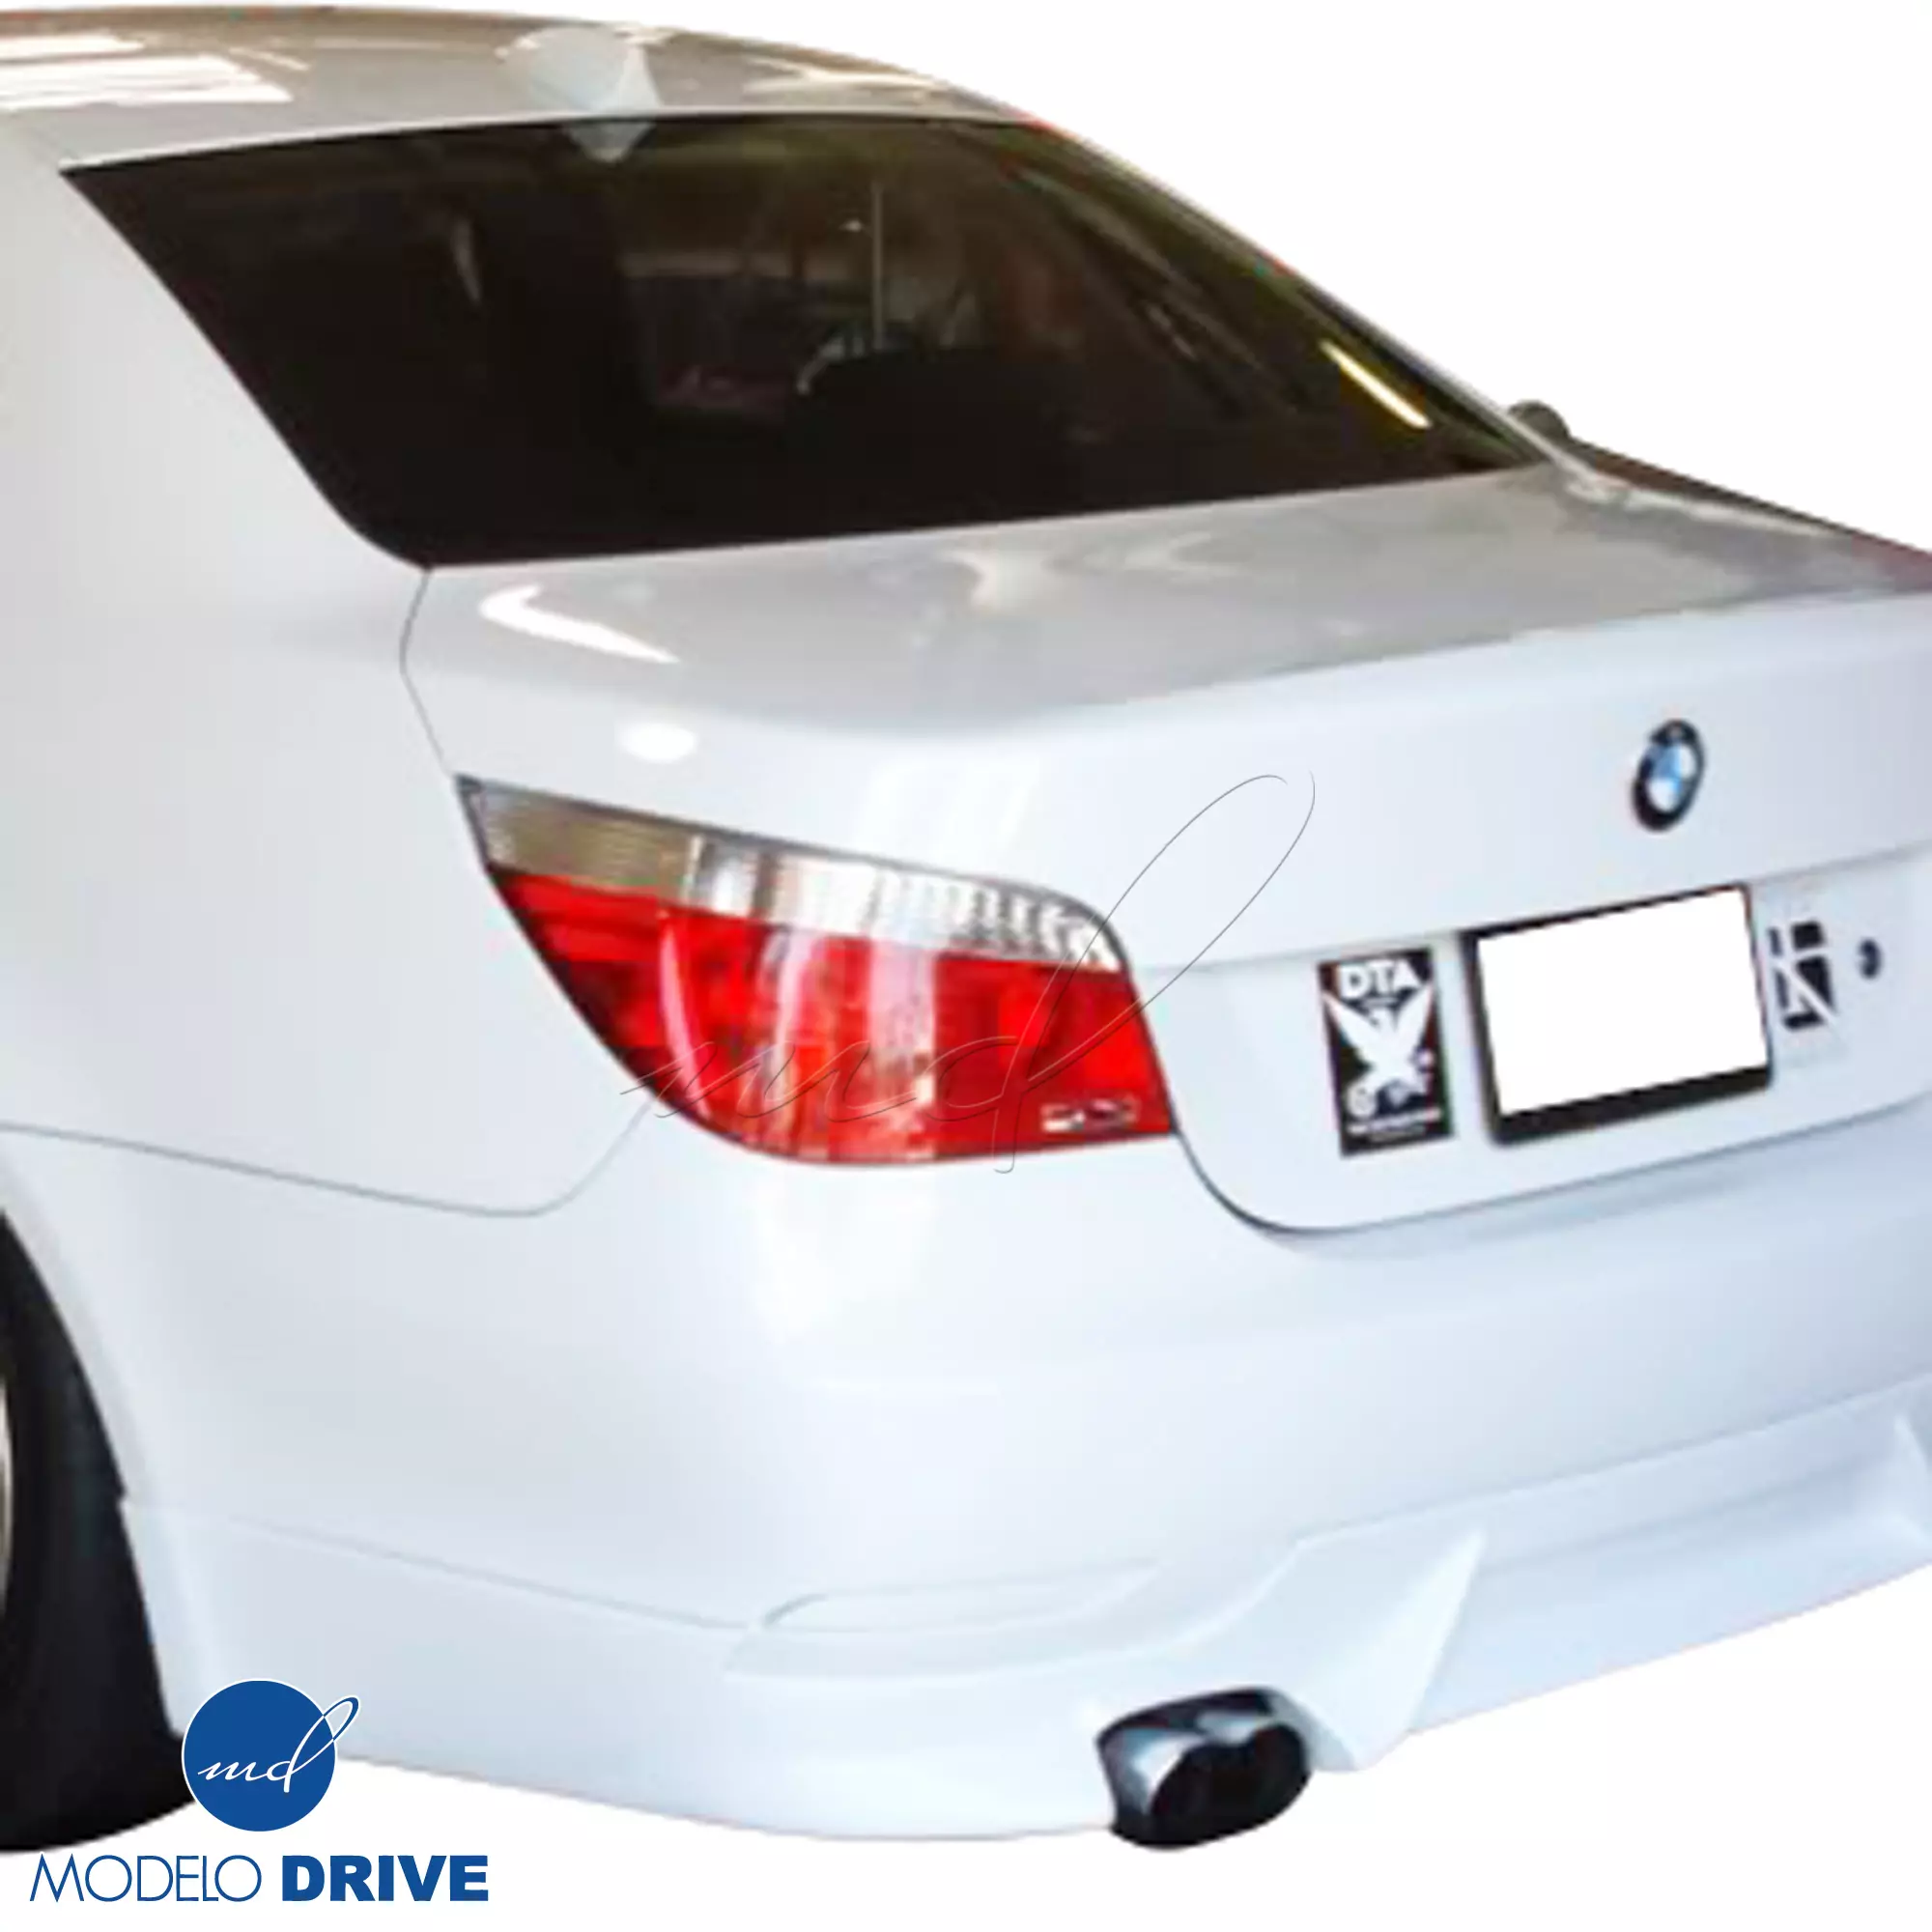 ModeloDrive FRP ASCH Rear Valance Add-on > BMW 5-Series E60 2004-2010 > 4dr - Image 1